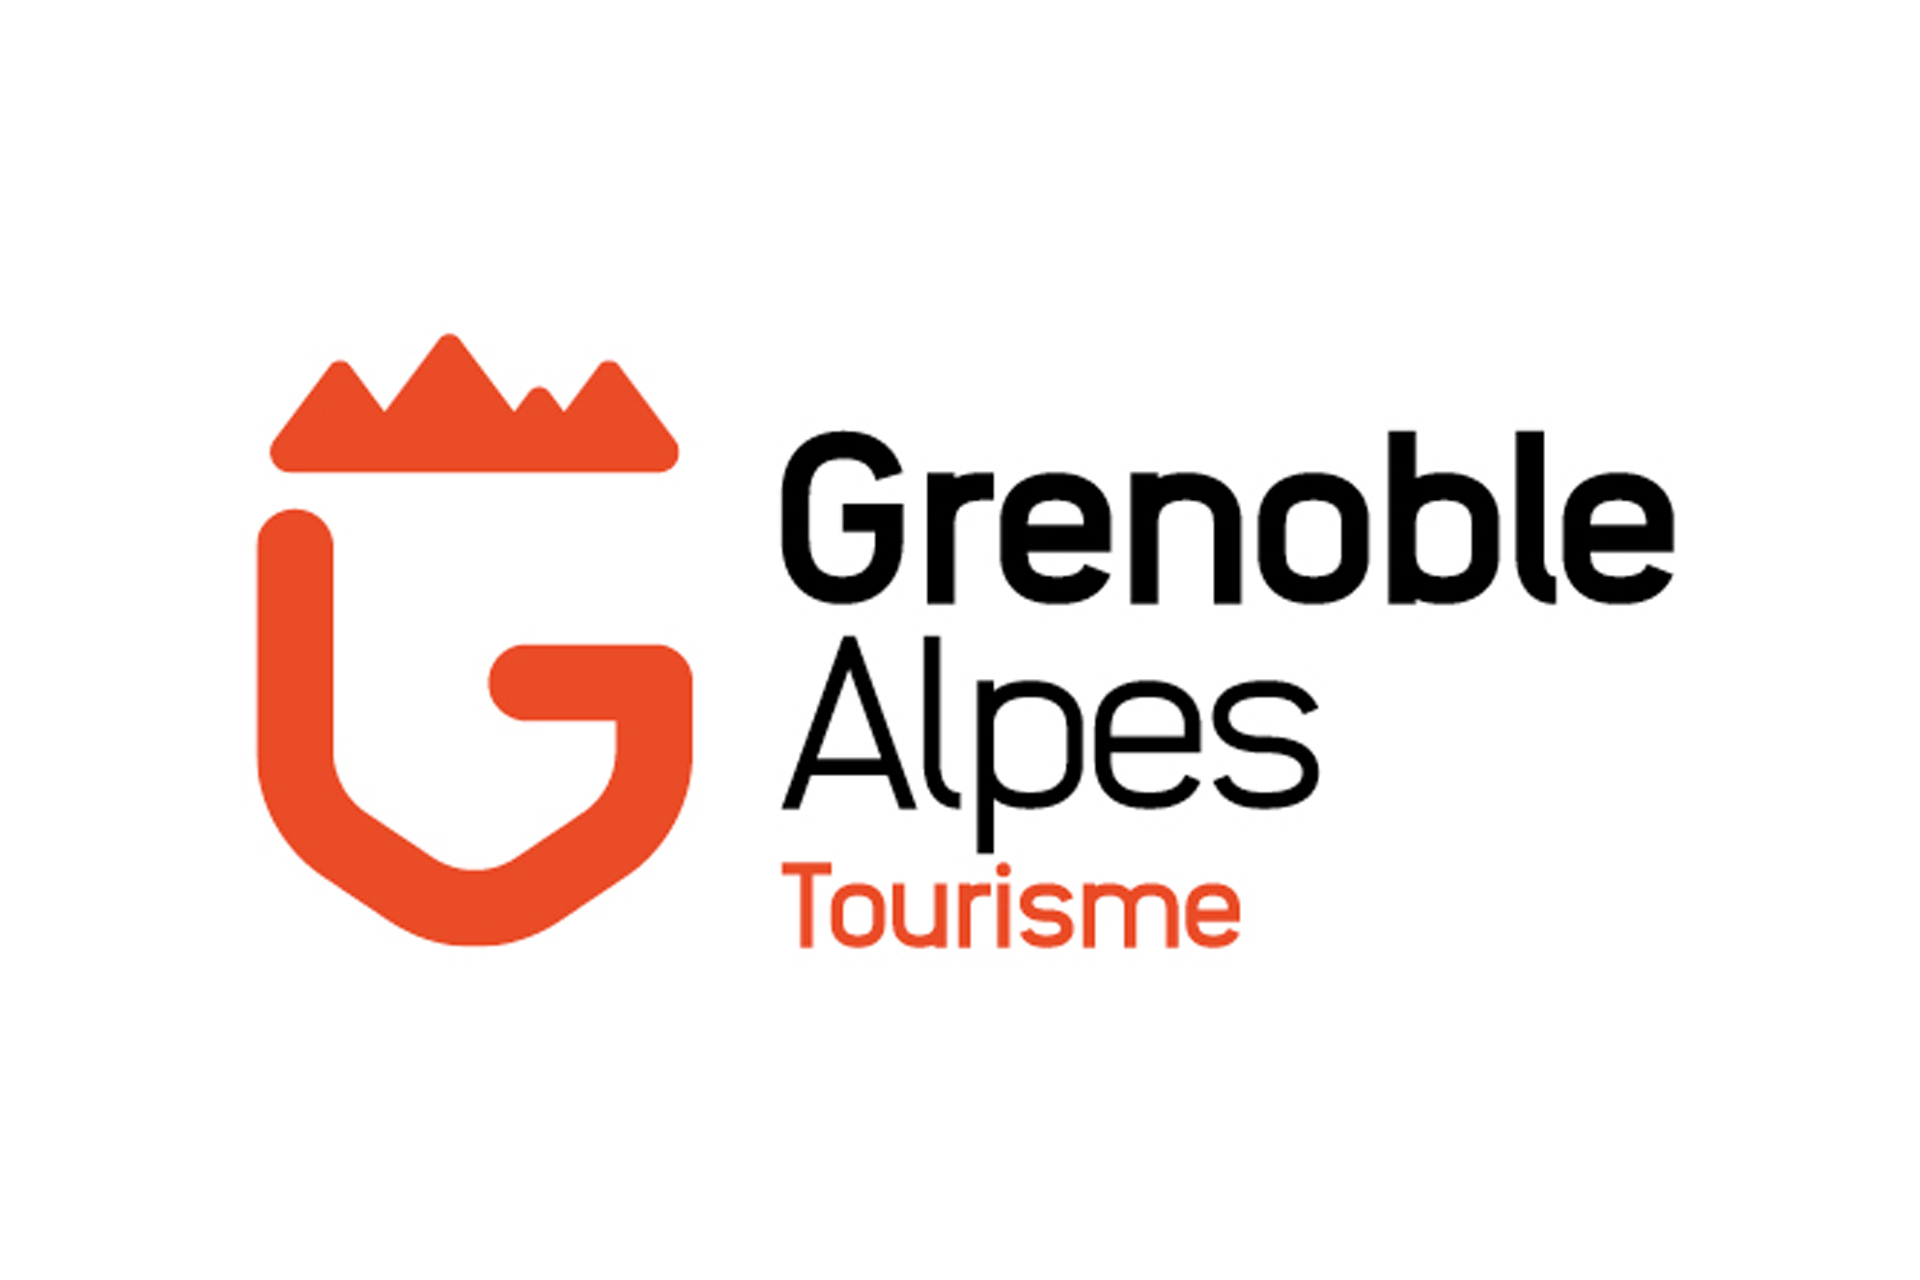 Chamrousse logo partenaire institution grenoble alpes tourisme station ski montagne isère alpes france - © Grenoble Alpes Tourisme